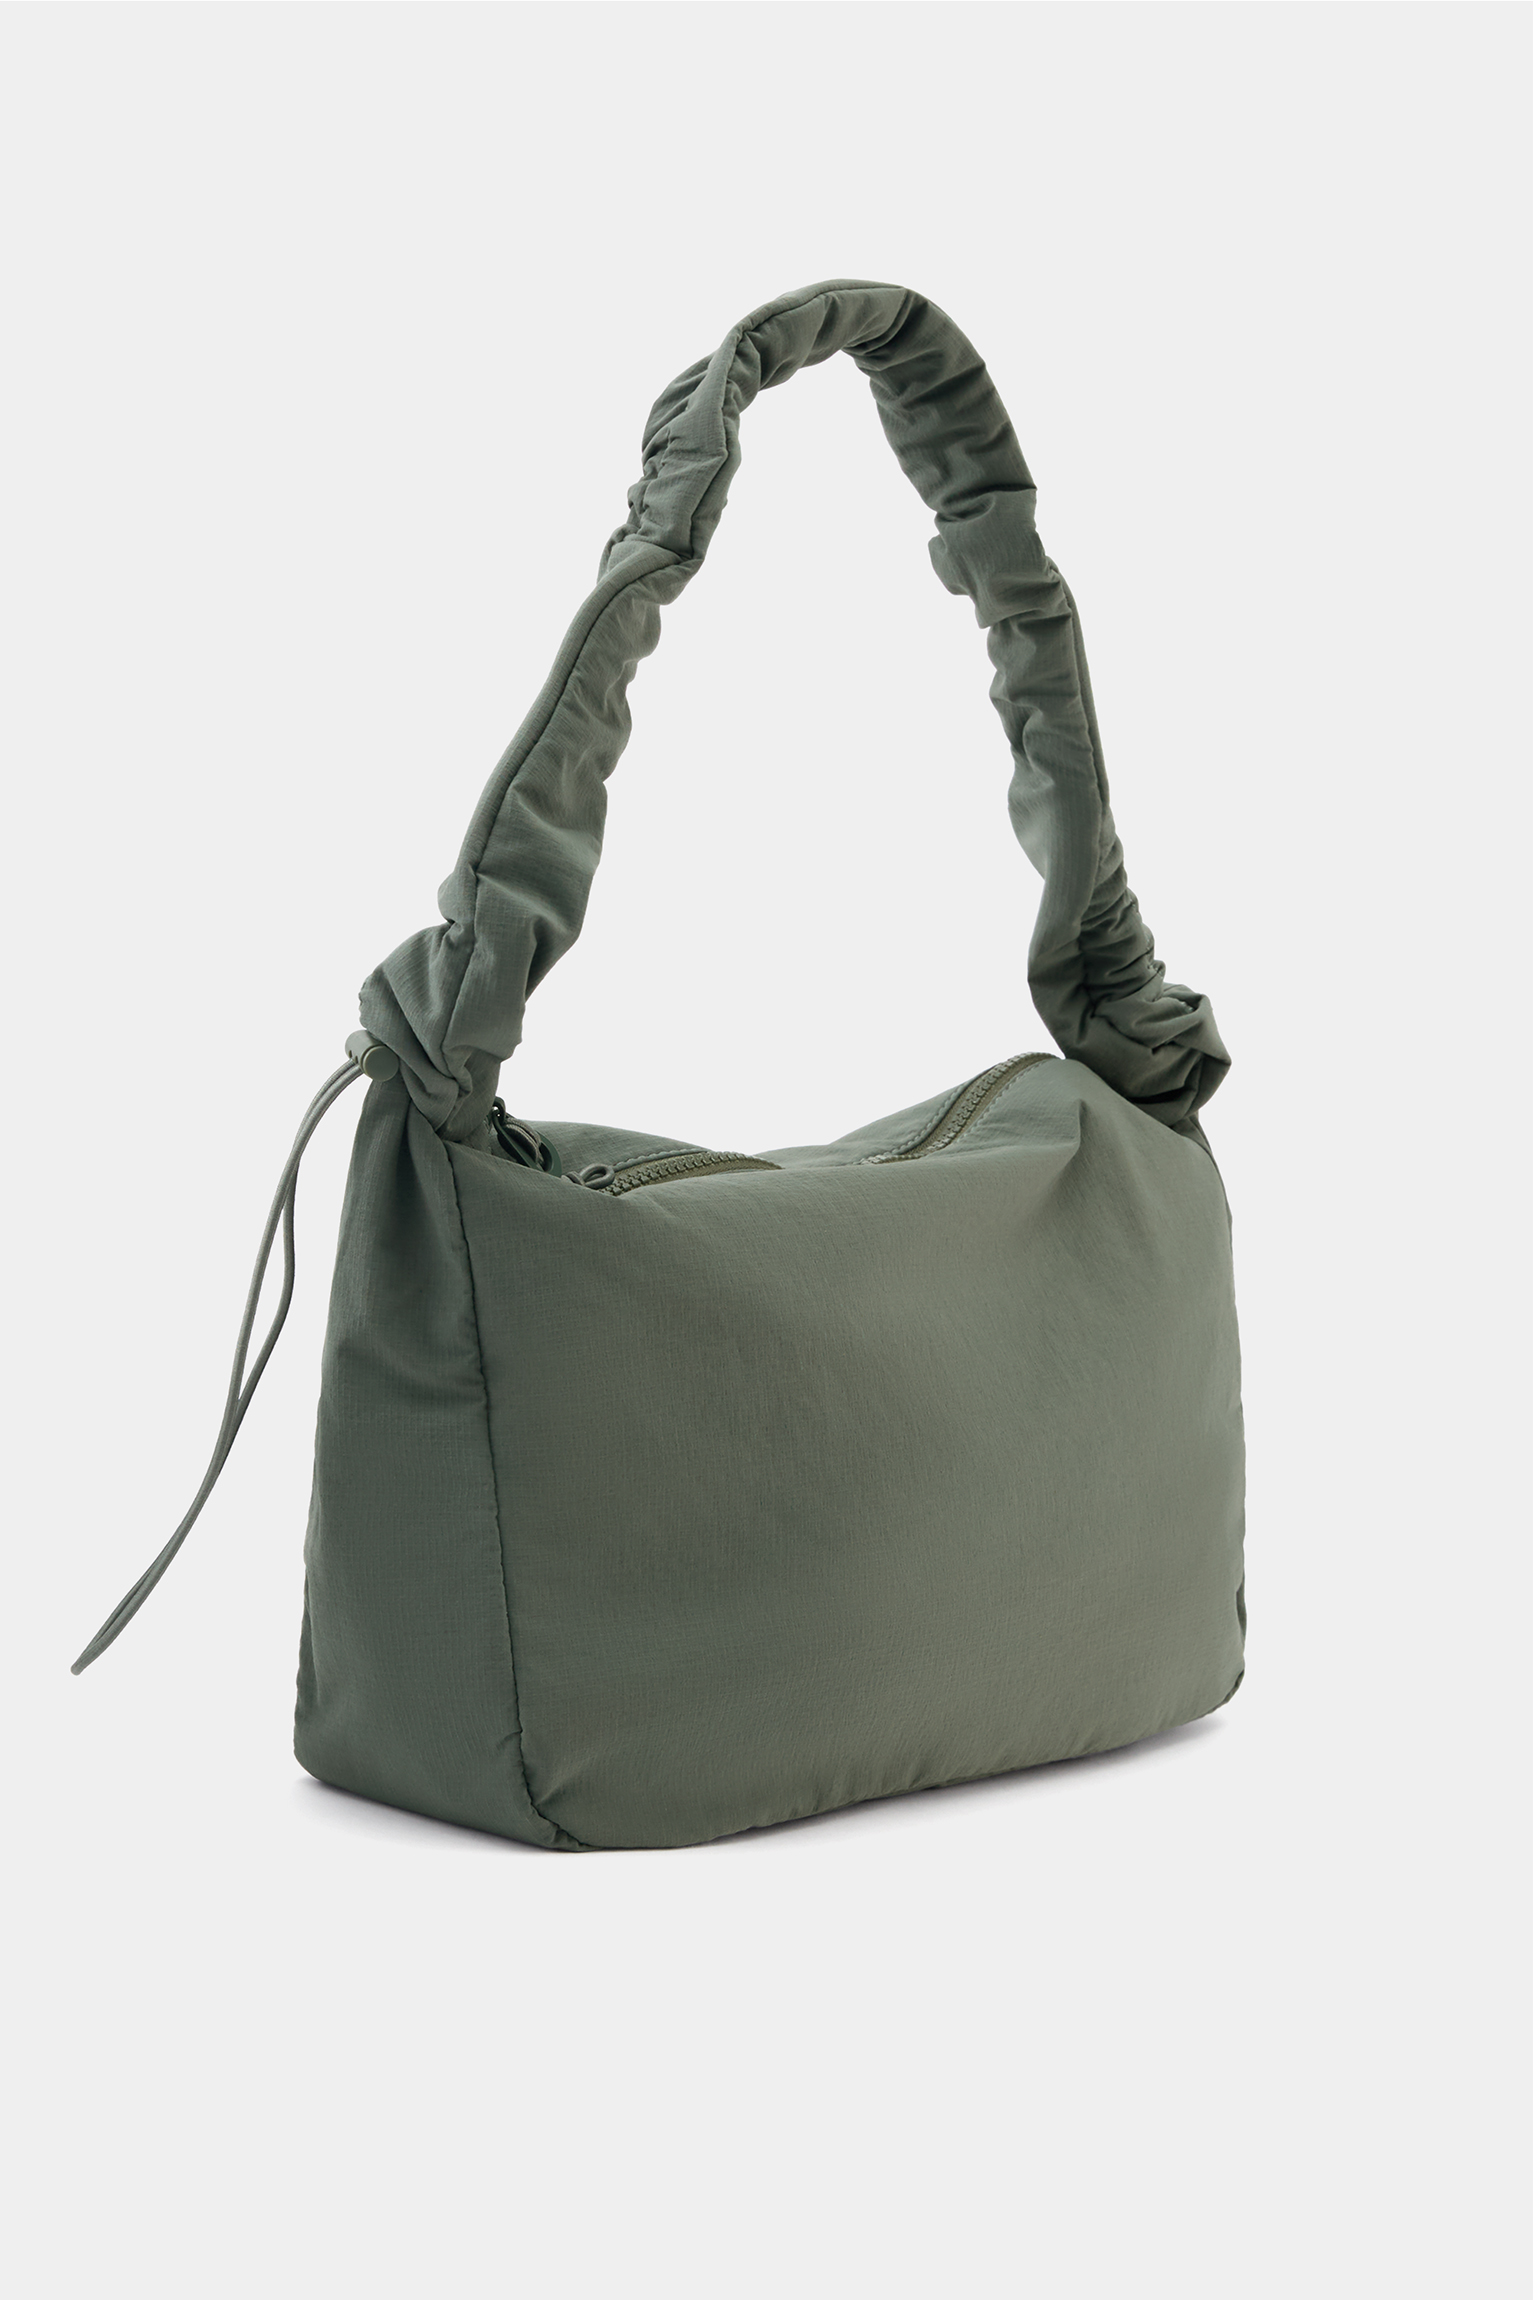 Nylon bag with gathered strap